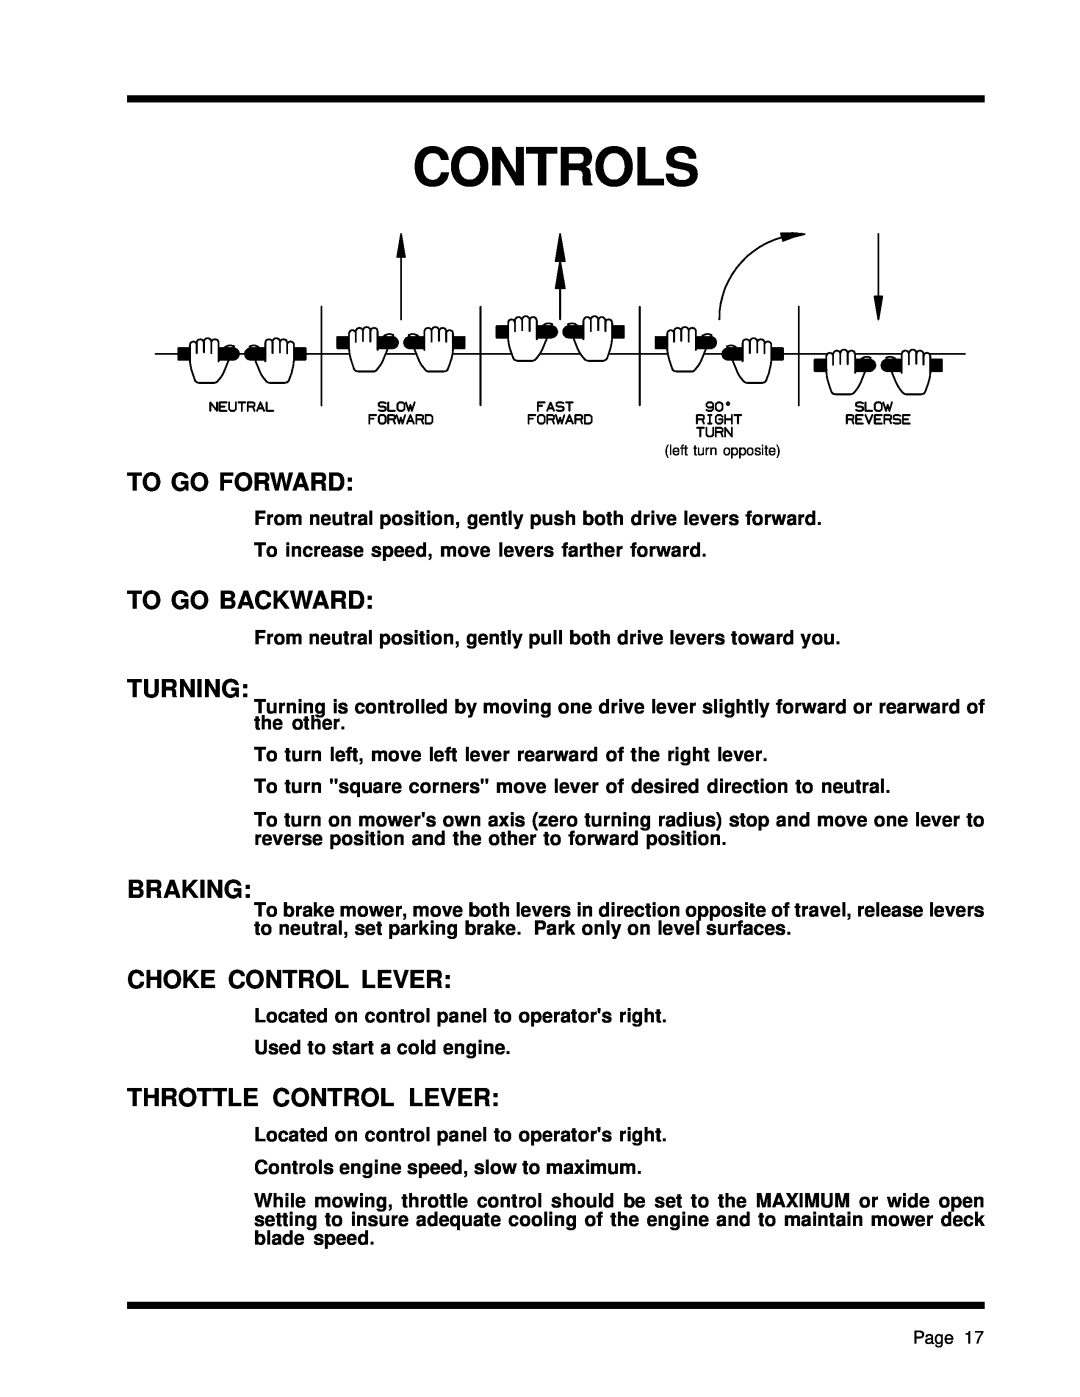 Dixon ZTR 5425, ZTR 5023 Controls, To Go Forward, To Go Backward, Braking, Choke Control Lever, Throttle Control Lever 